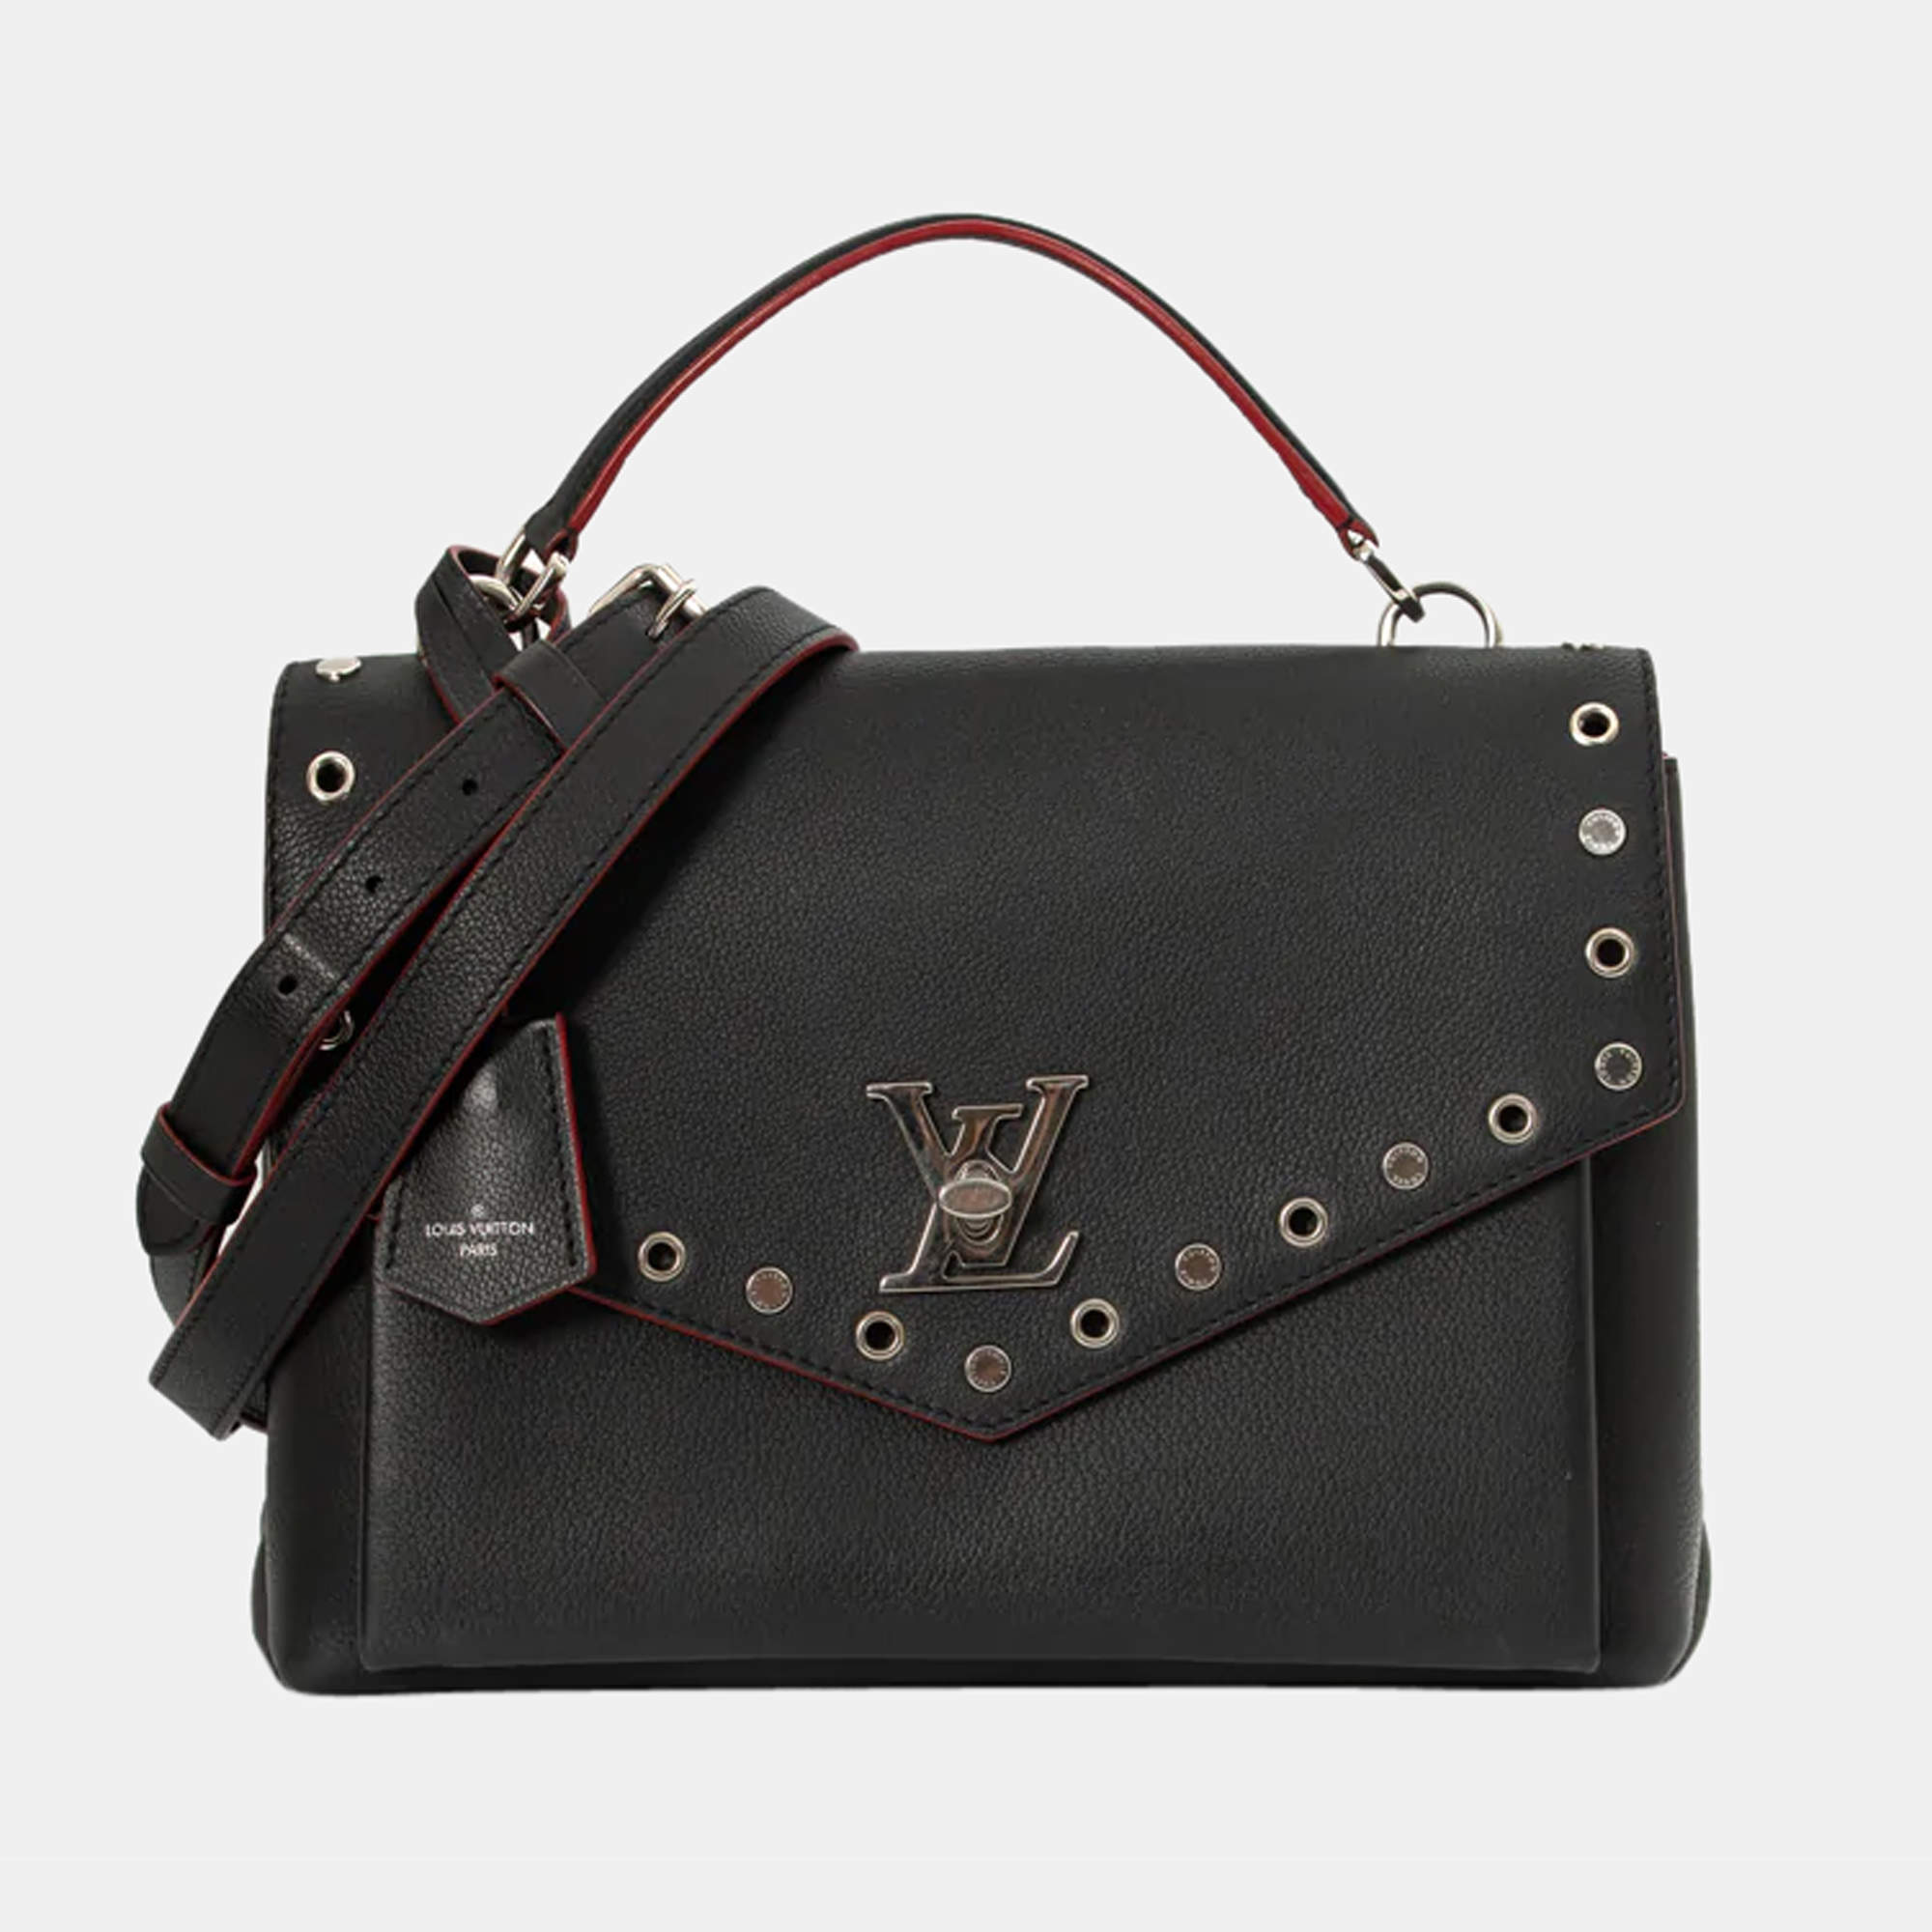 Louis Vuitton Taurillon Lockme Backpack - Red Backpacks, Handbags